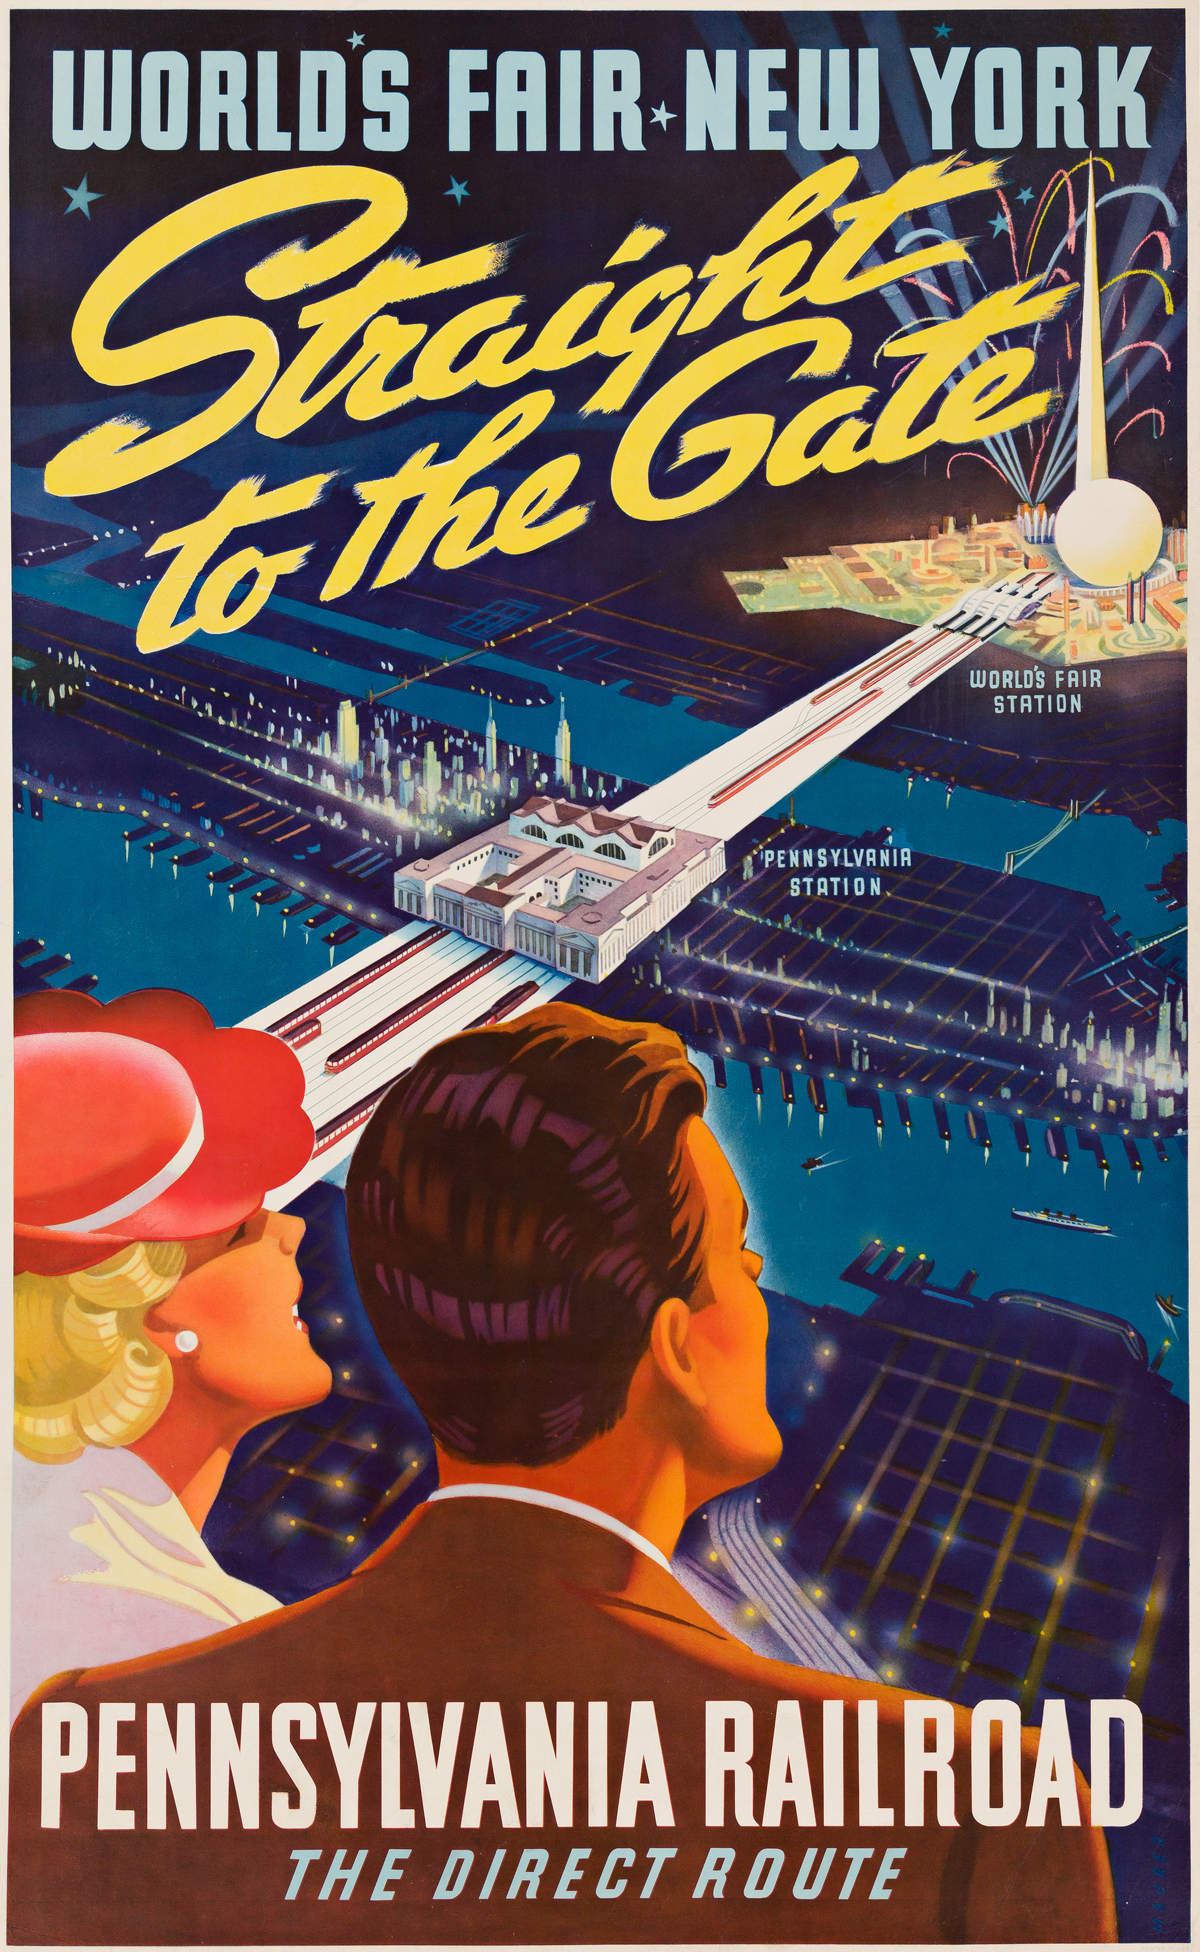 Sascha Maurer (1897-1961).  WORLDS FAIR NEW YORK / STRAIGHT TO THE GATE / PENNSYLVANIA RAILROAD. 1939.